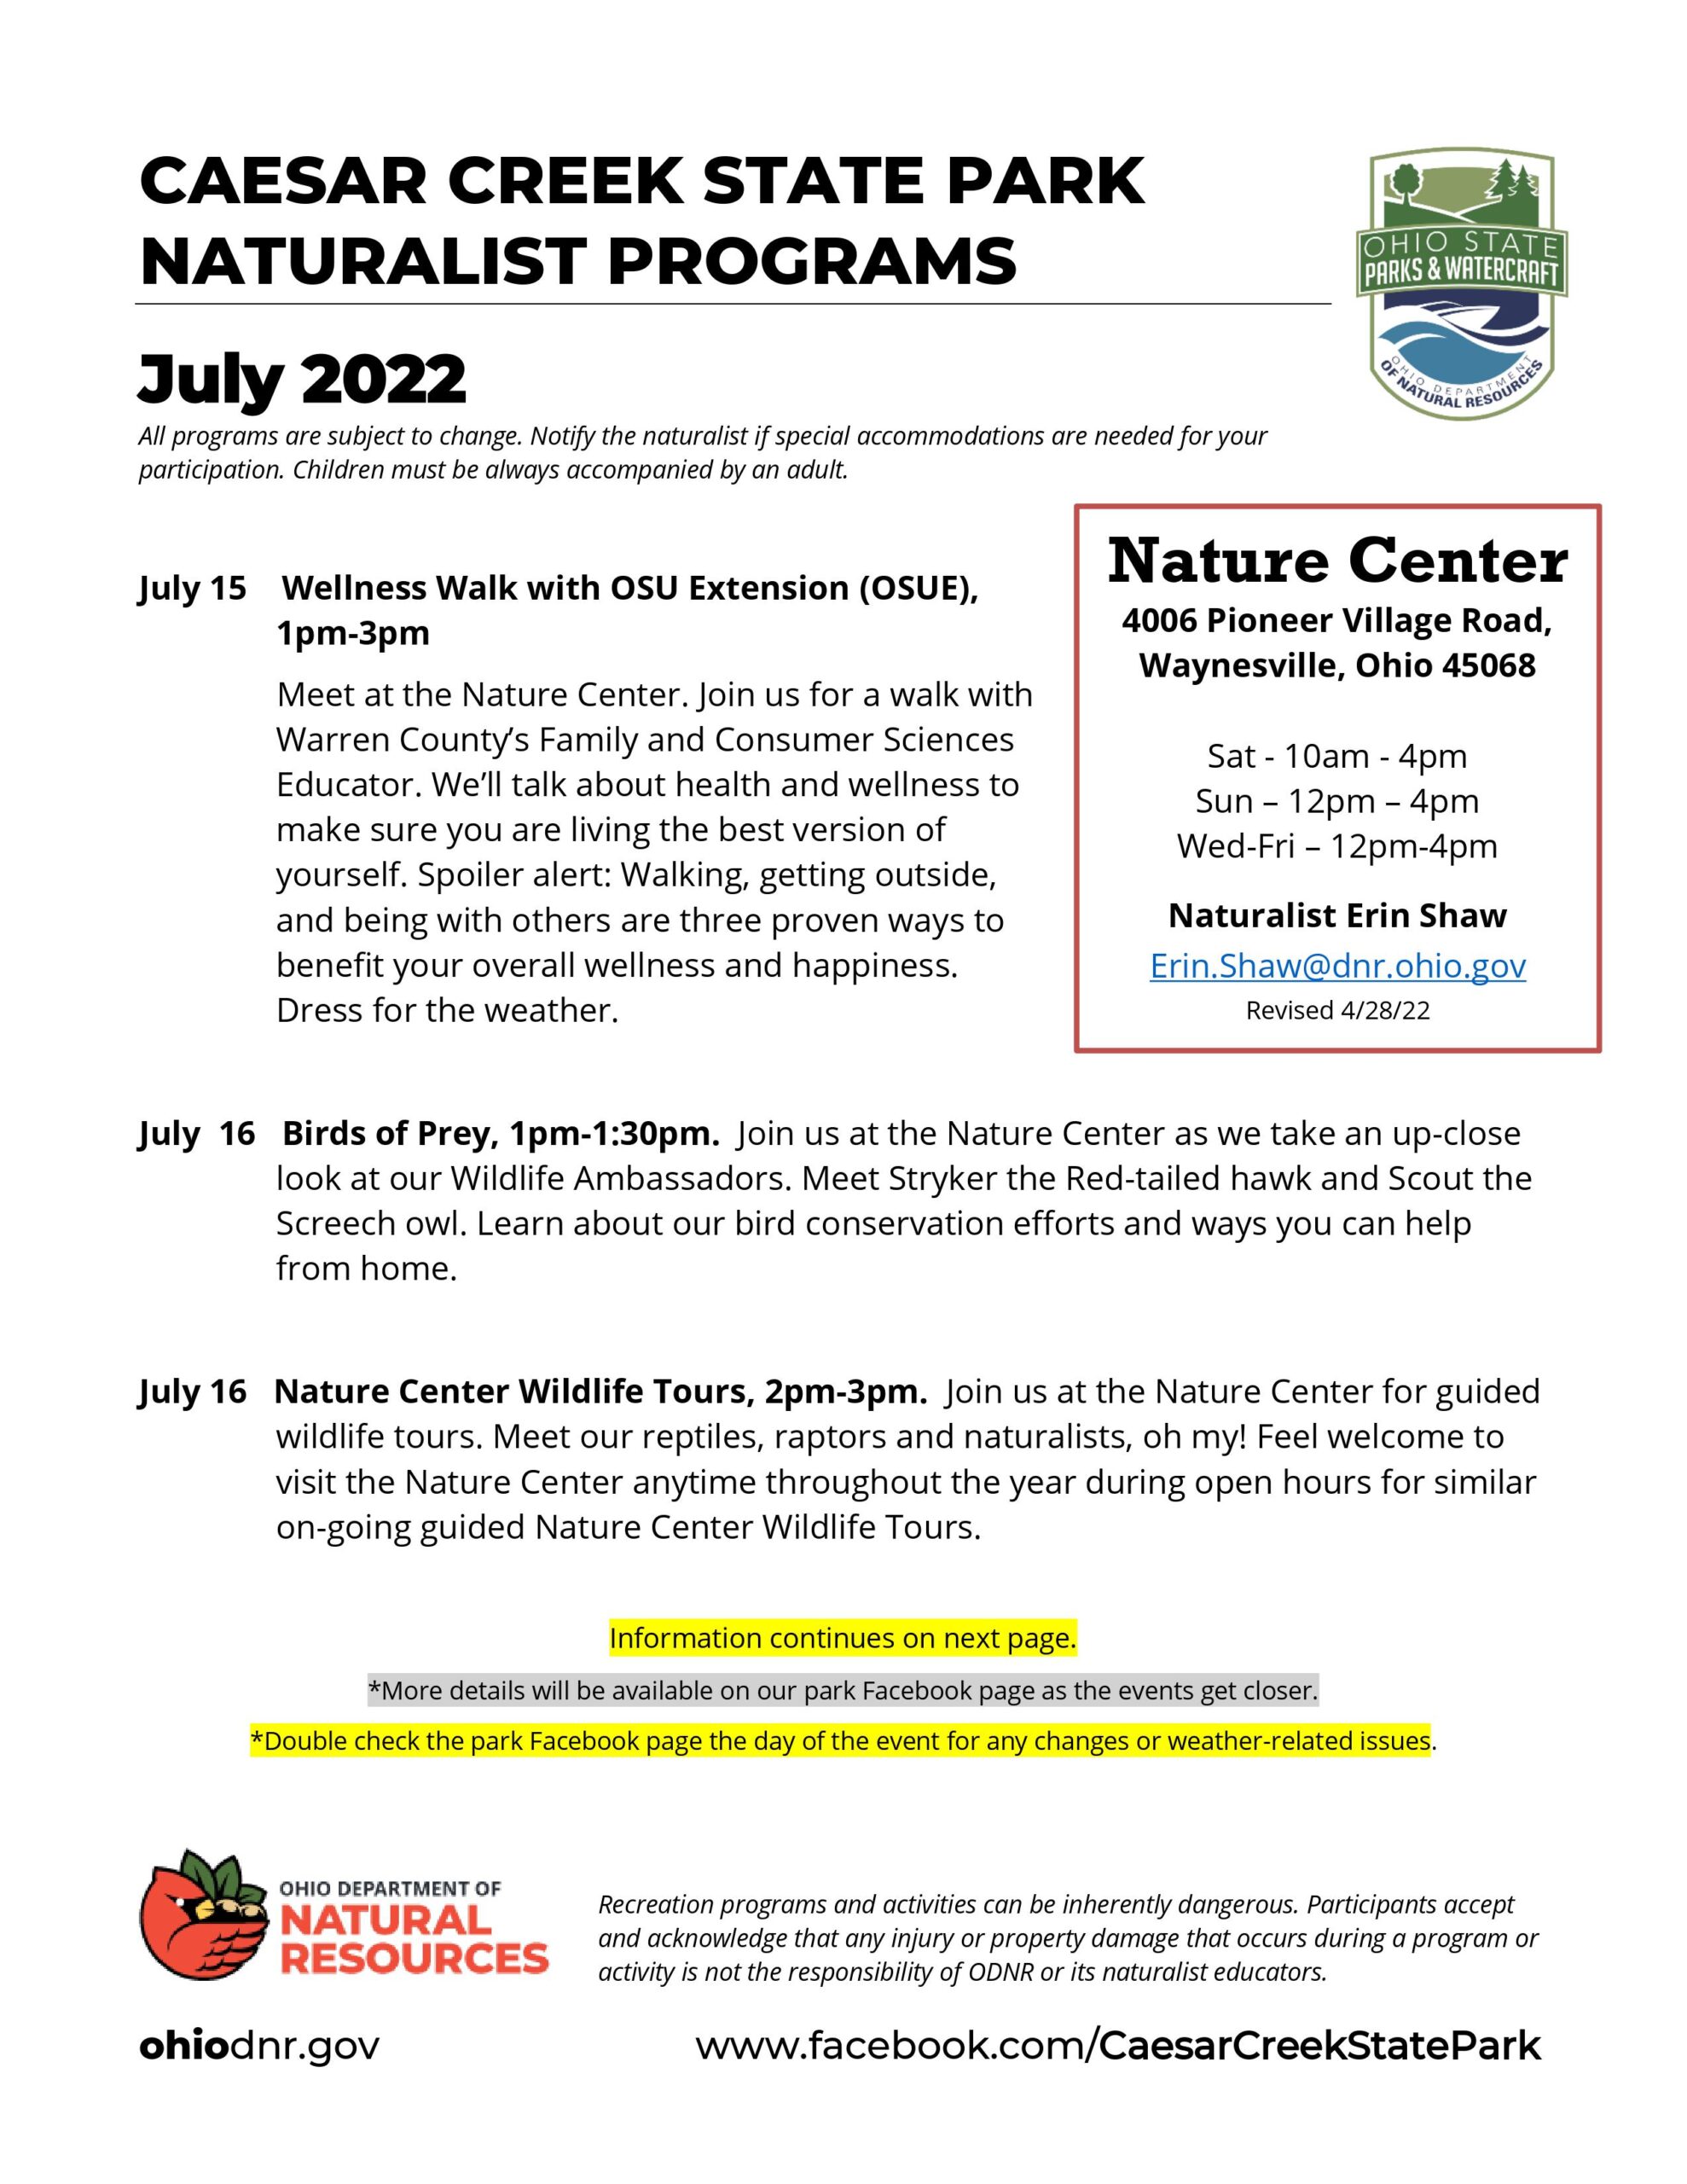 July 2022 Programs3